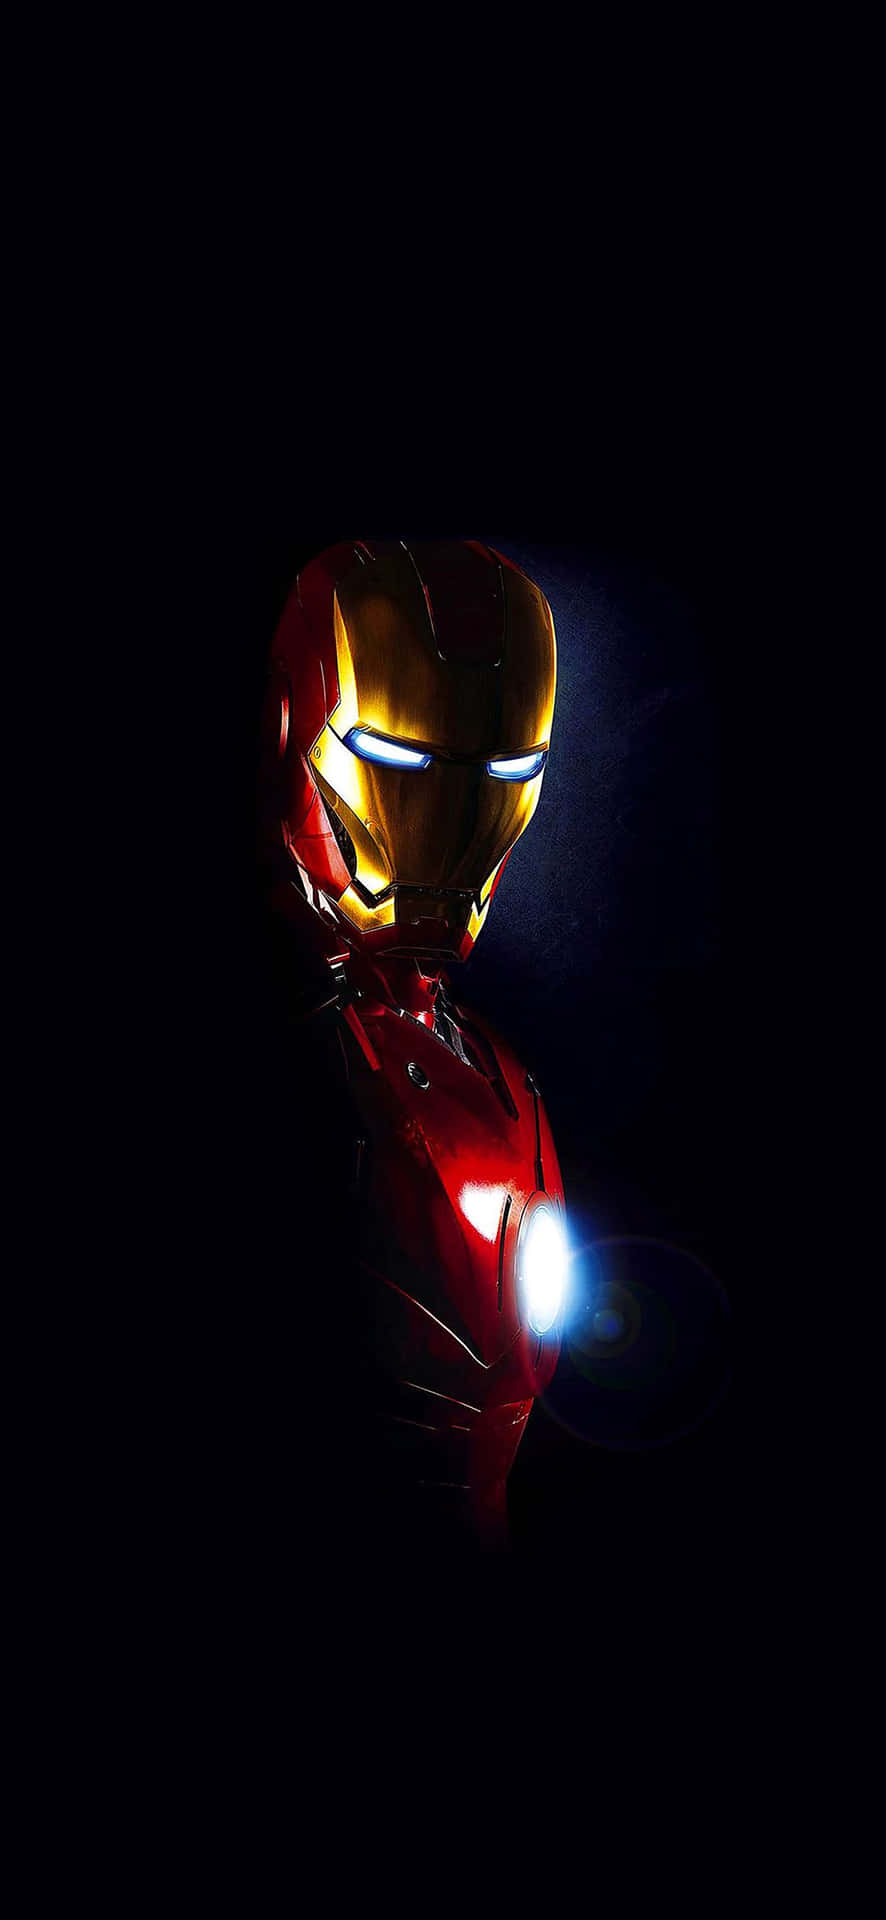 Afslør kraften af Iron Man Iphone X Wallpaper